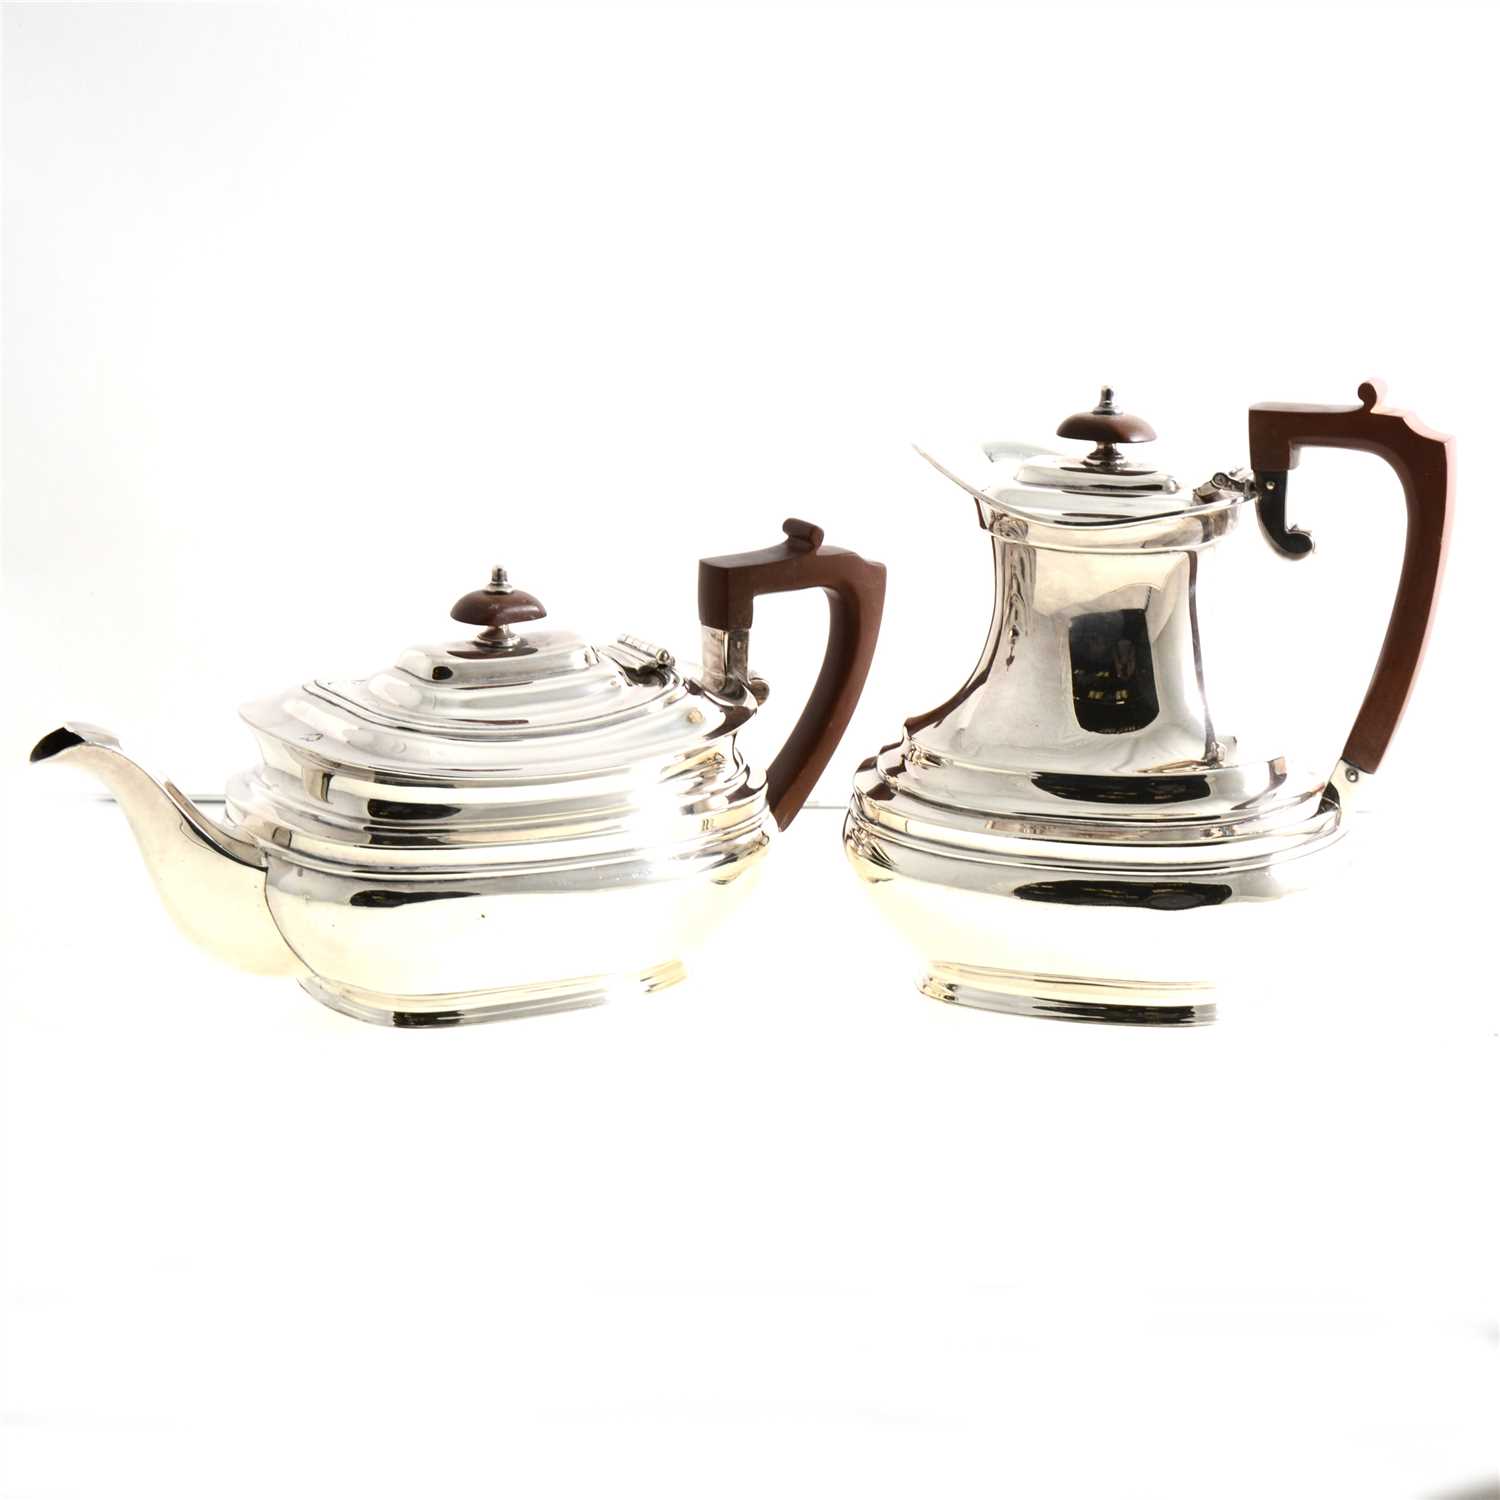 Lot 195 - A Georgian design silver teapot and hot water jug by George Tarratt Ltd, brown wooden handles and finials, Sheffield 1961, total gross weight approx. 38.8oz.